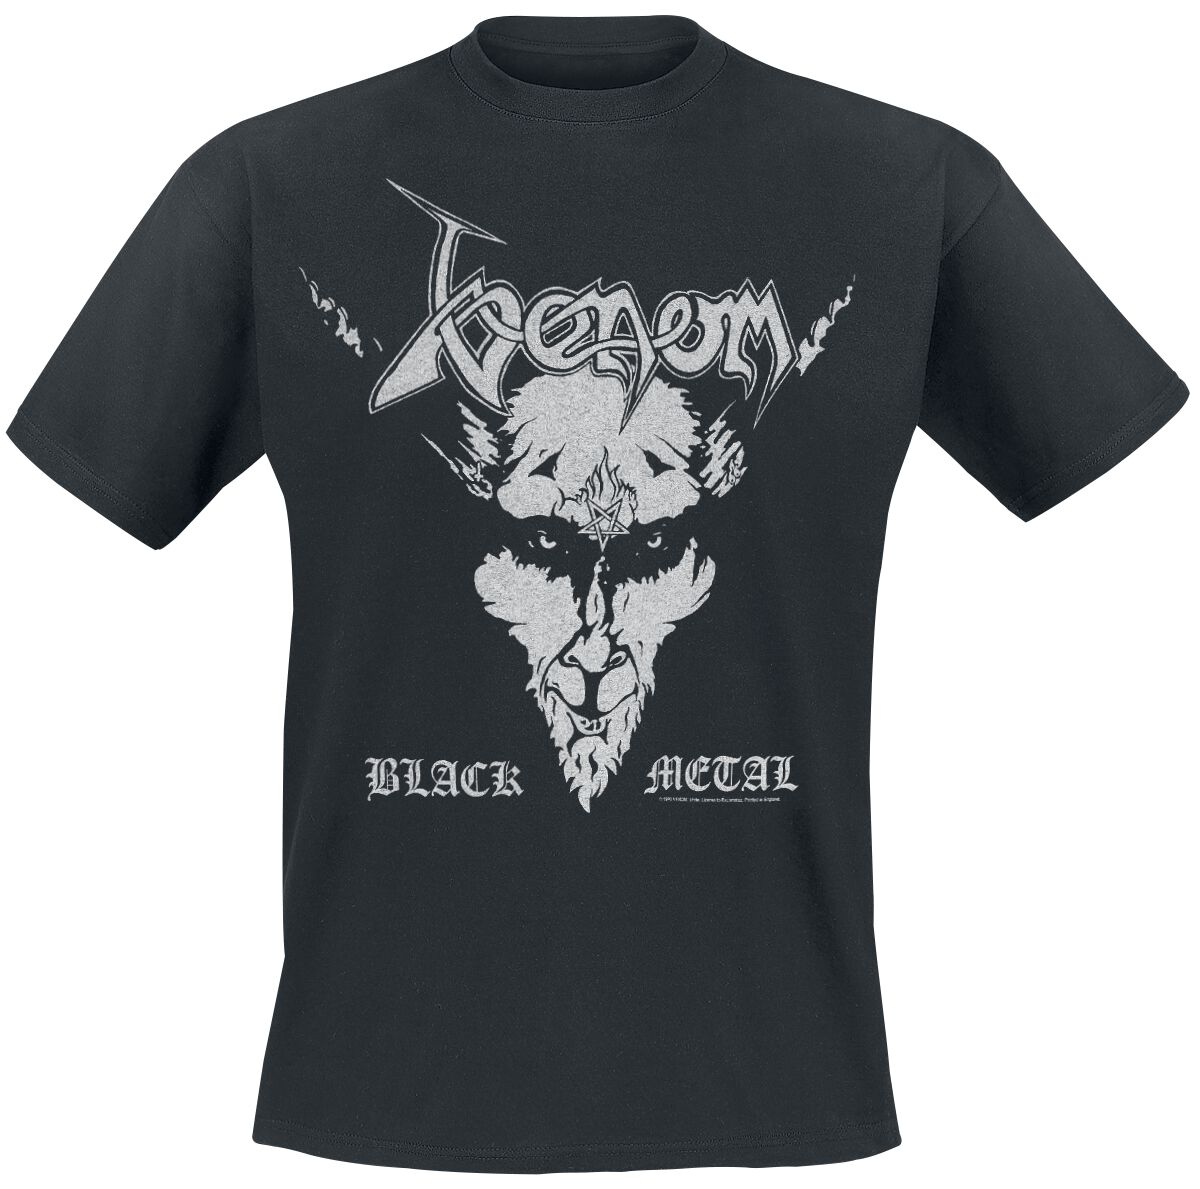 Image of T-Shirt di Venom - Black metal - M a XXL - Uomo - nero